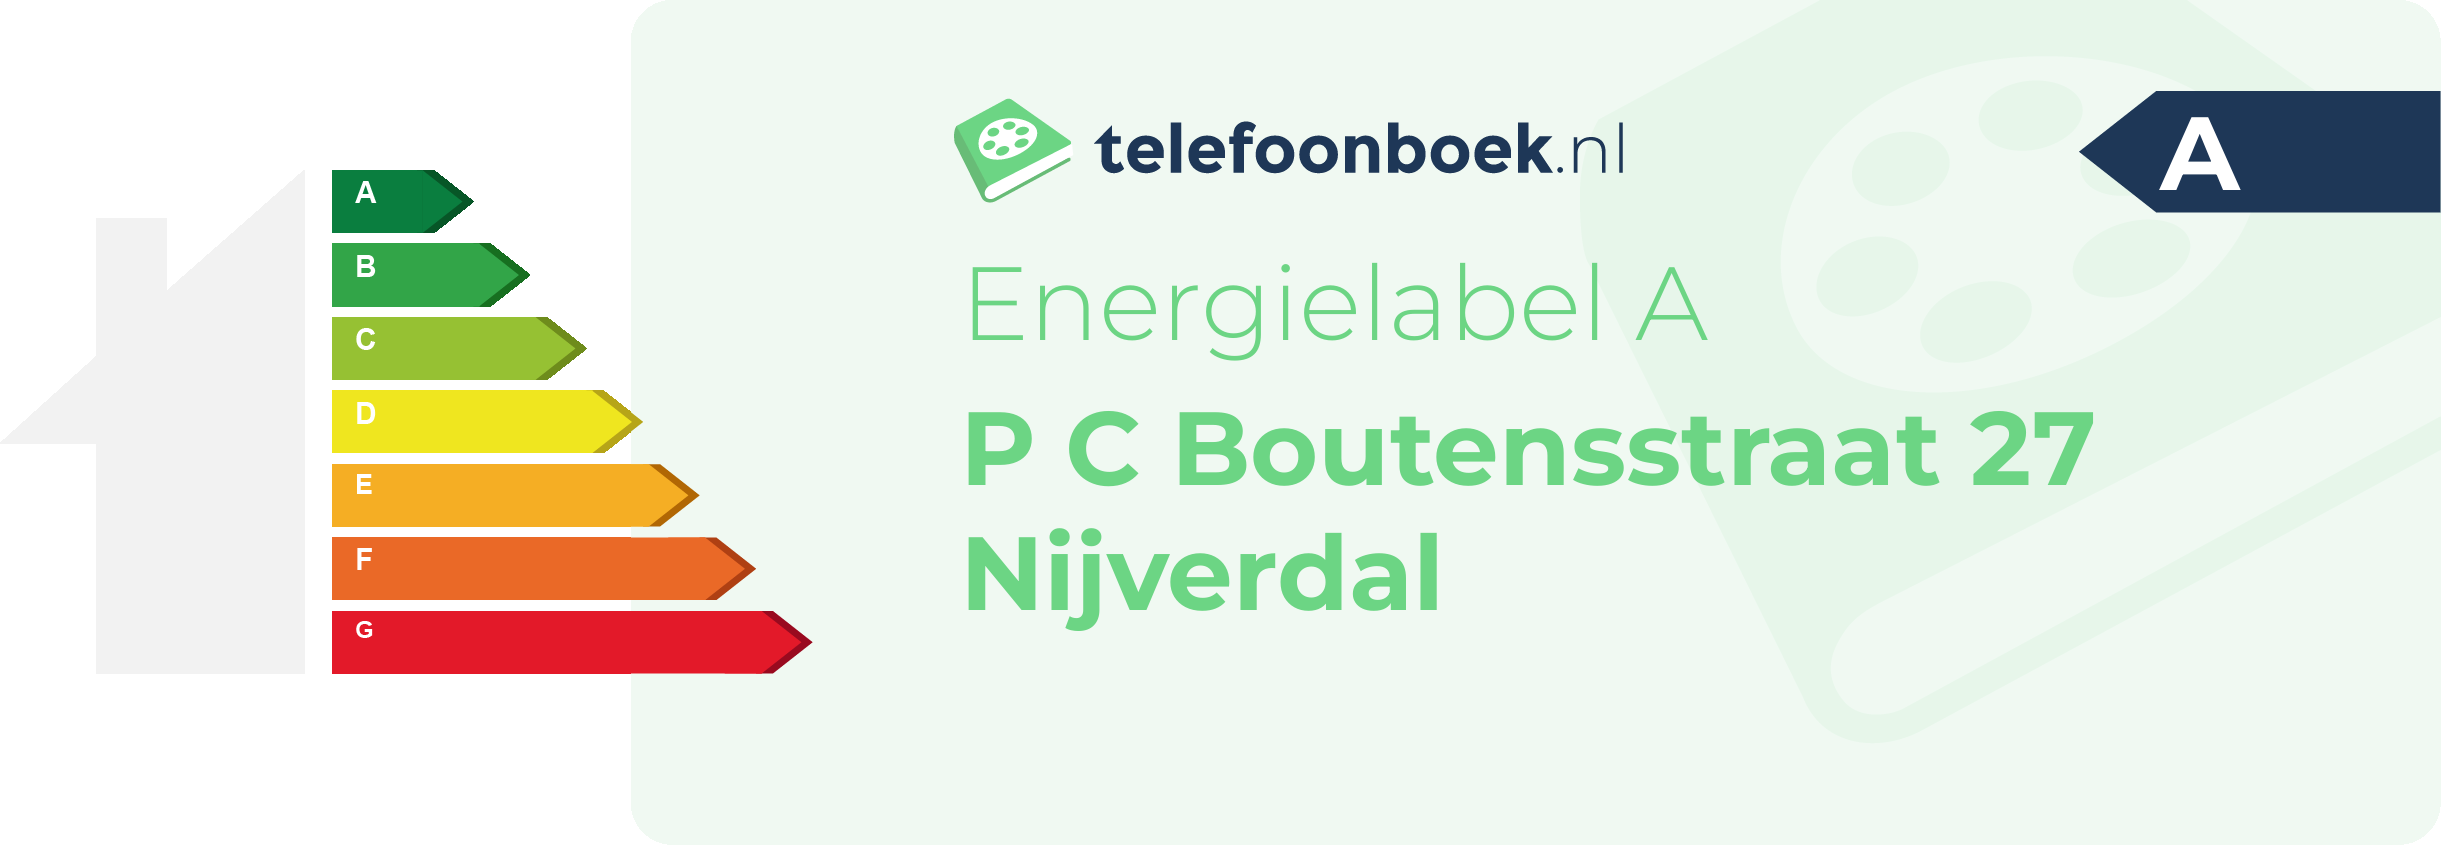 Energielabel P C Boutensstraat 27 Nijverdal